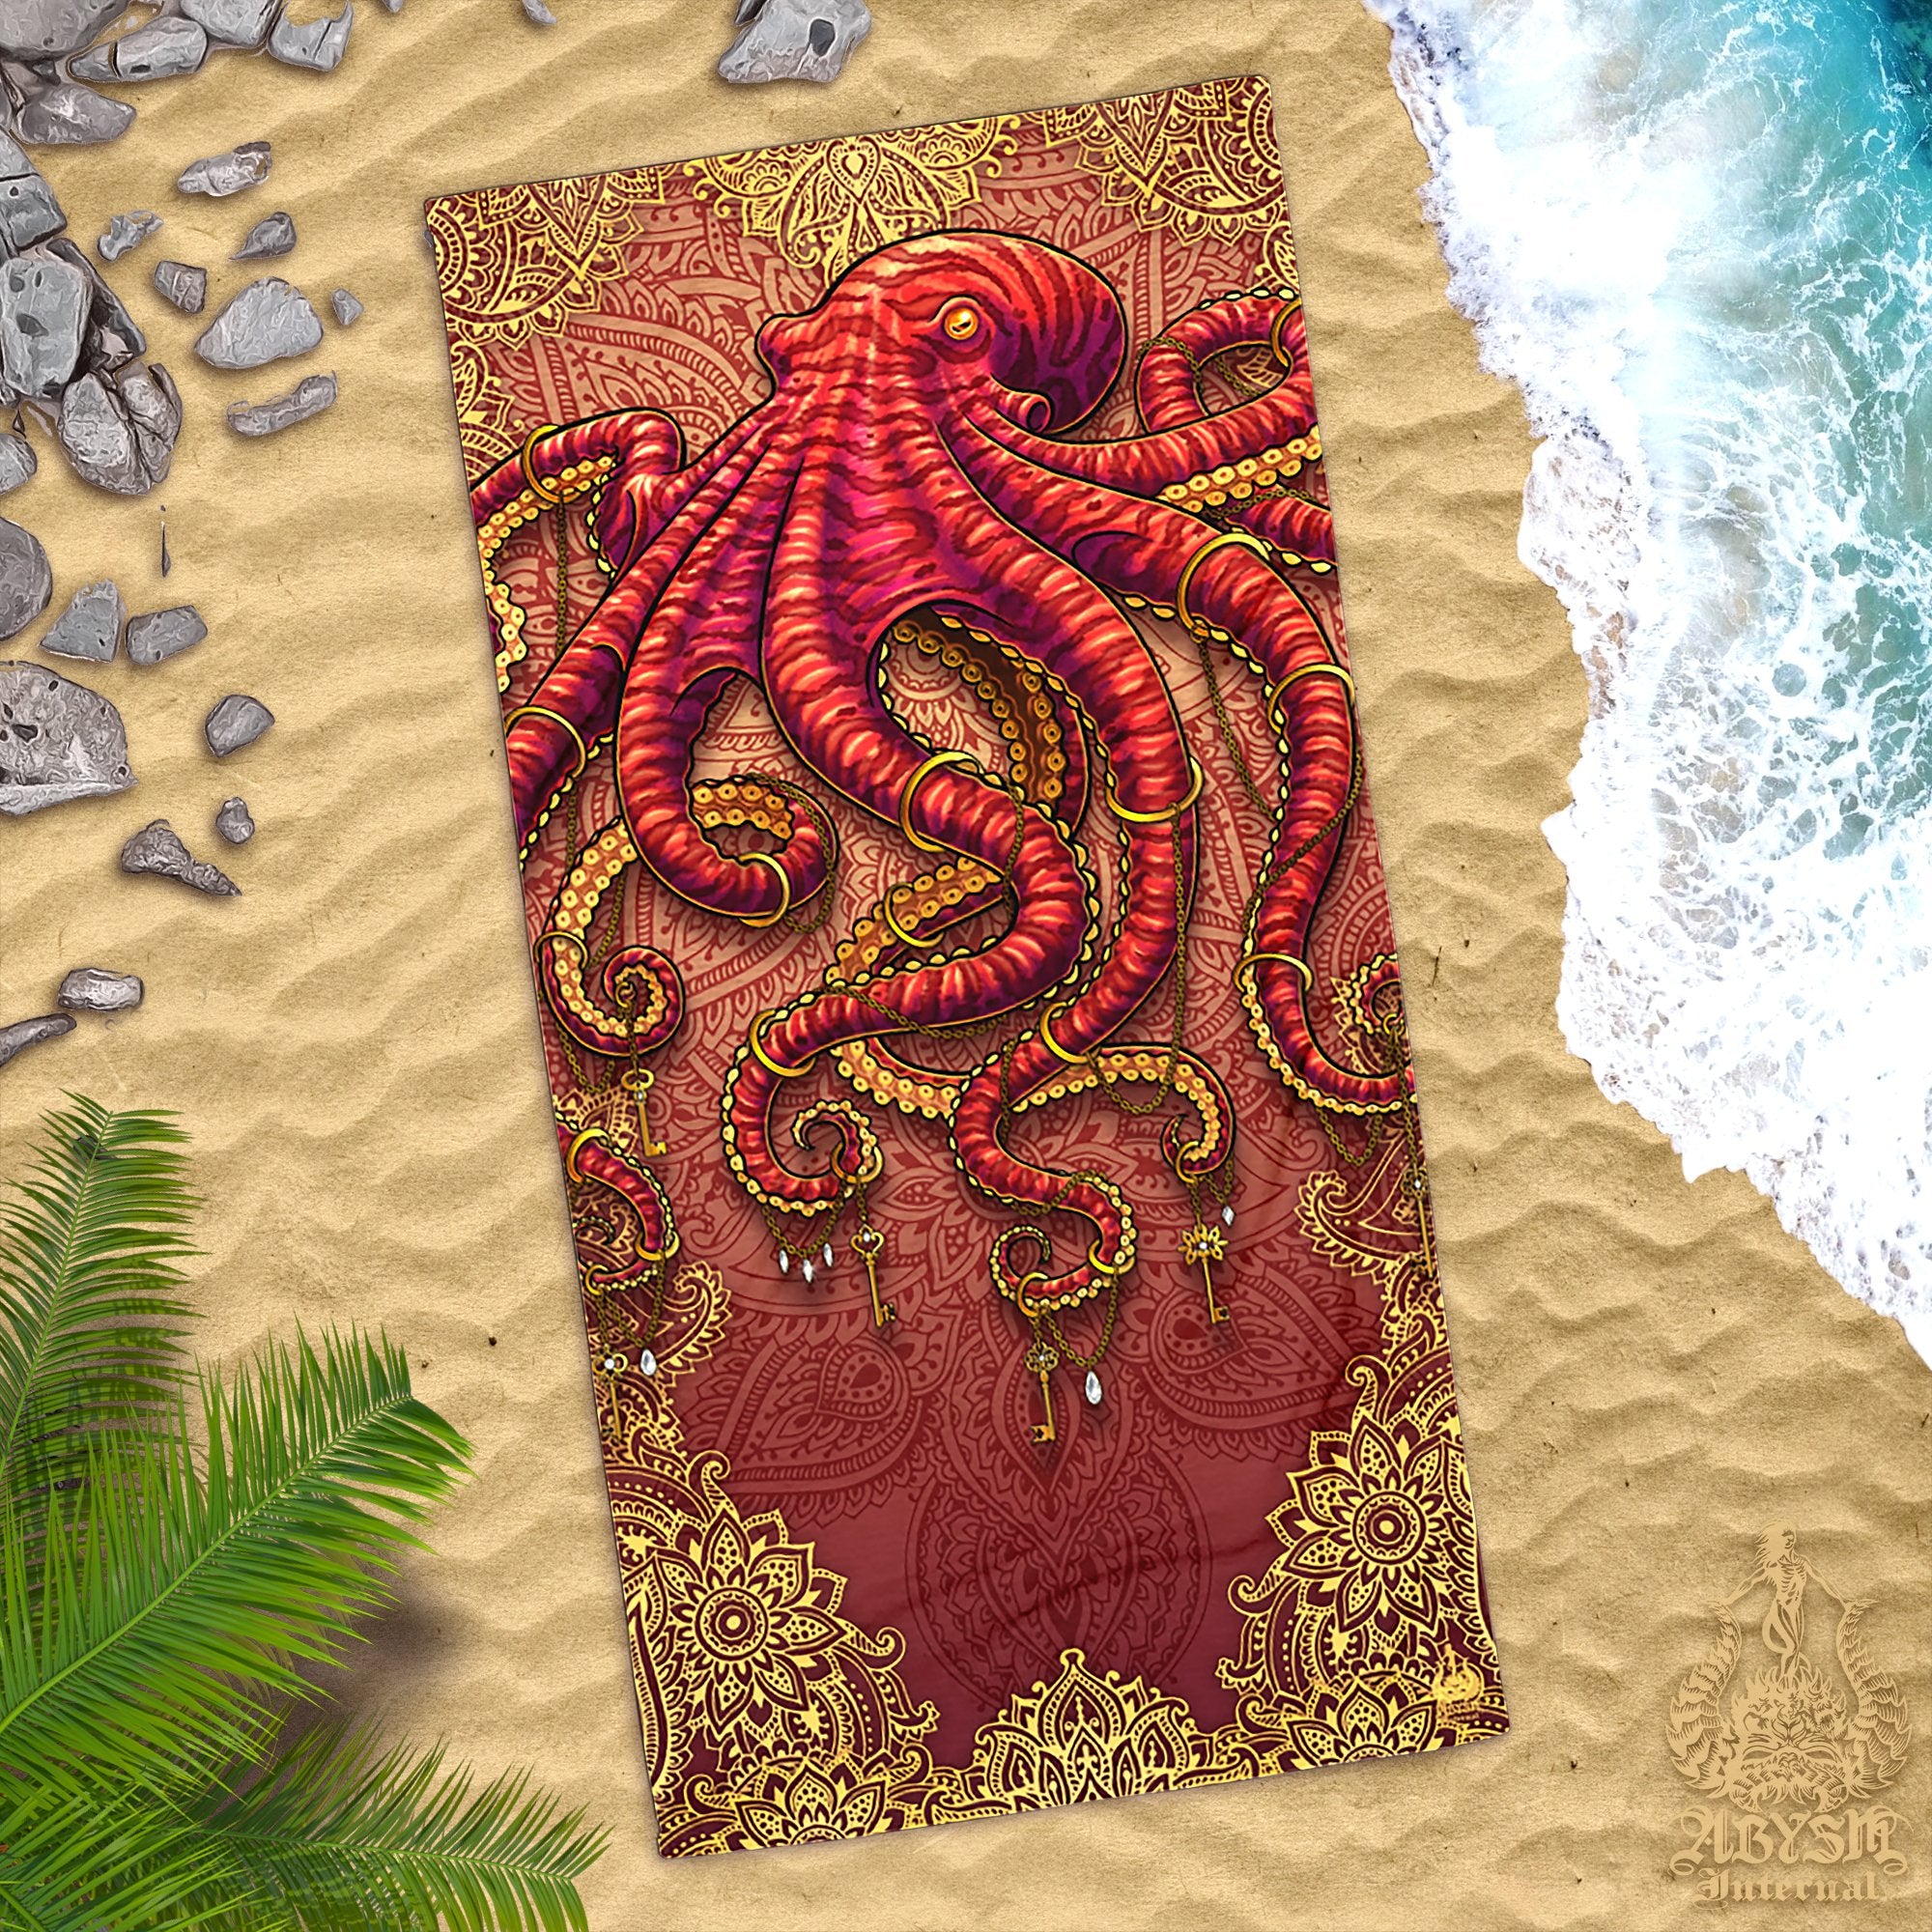 Boho Beach Towel, Indie Gift, Mandala - Treble Clef Music Dragon, Octopus, Spider - Abysm Internal